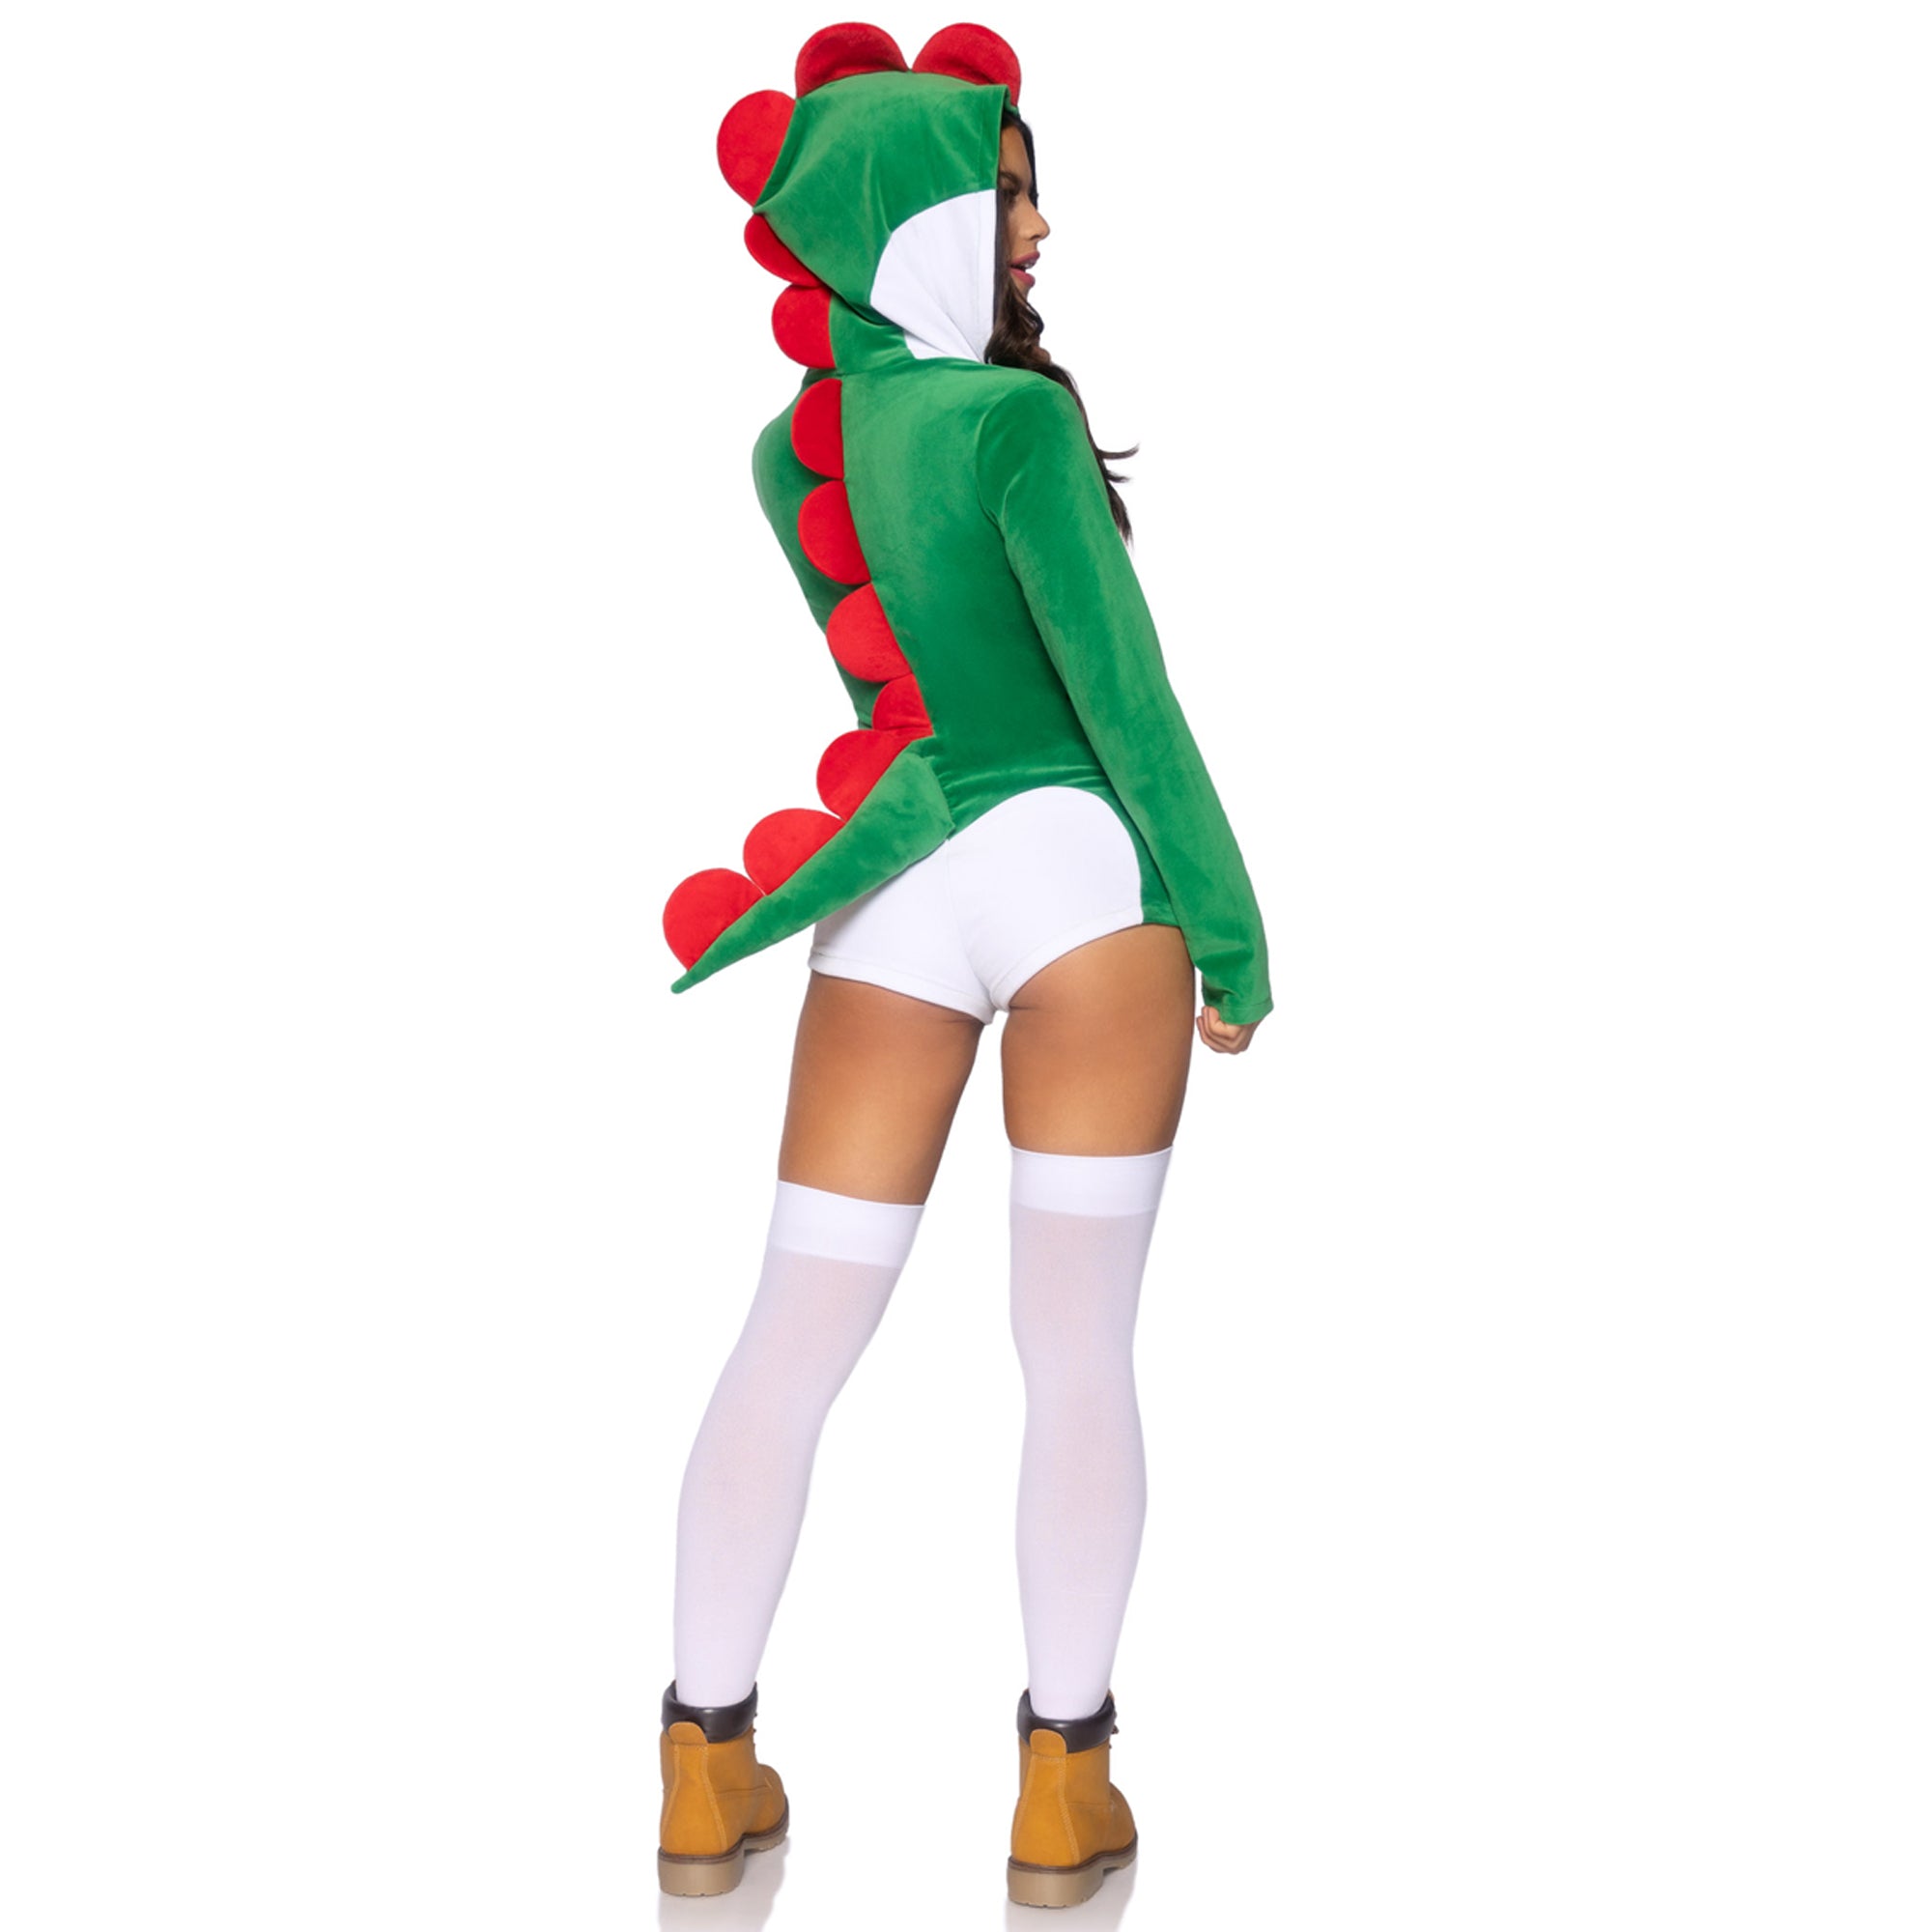 Super Dino Sexy Costume for Adults, Green Romper